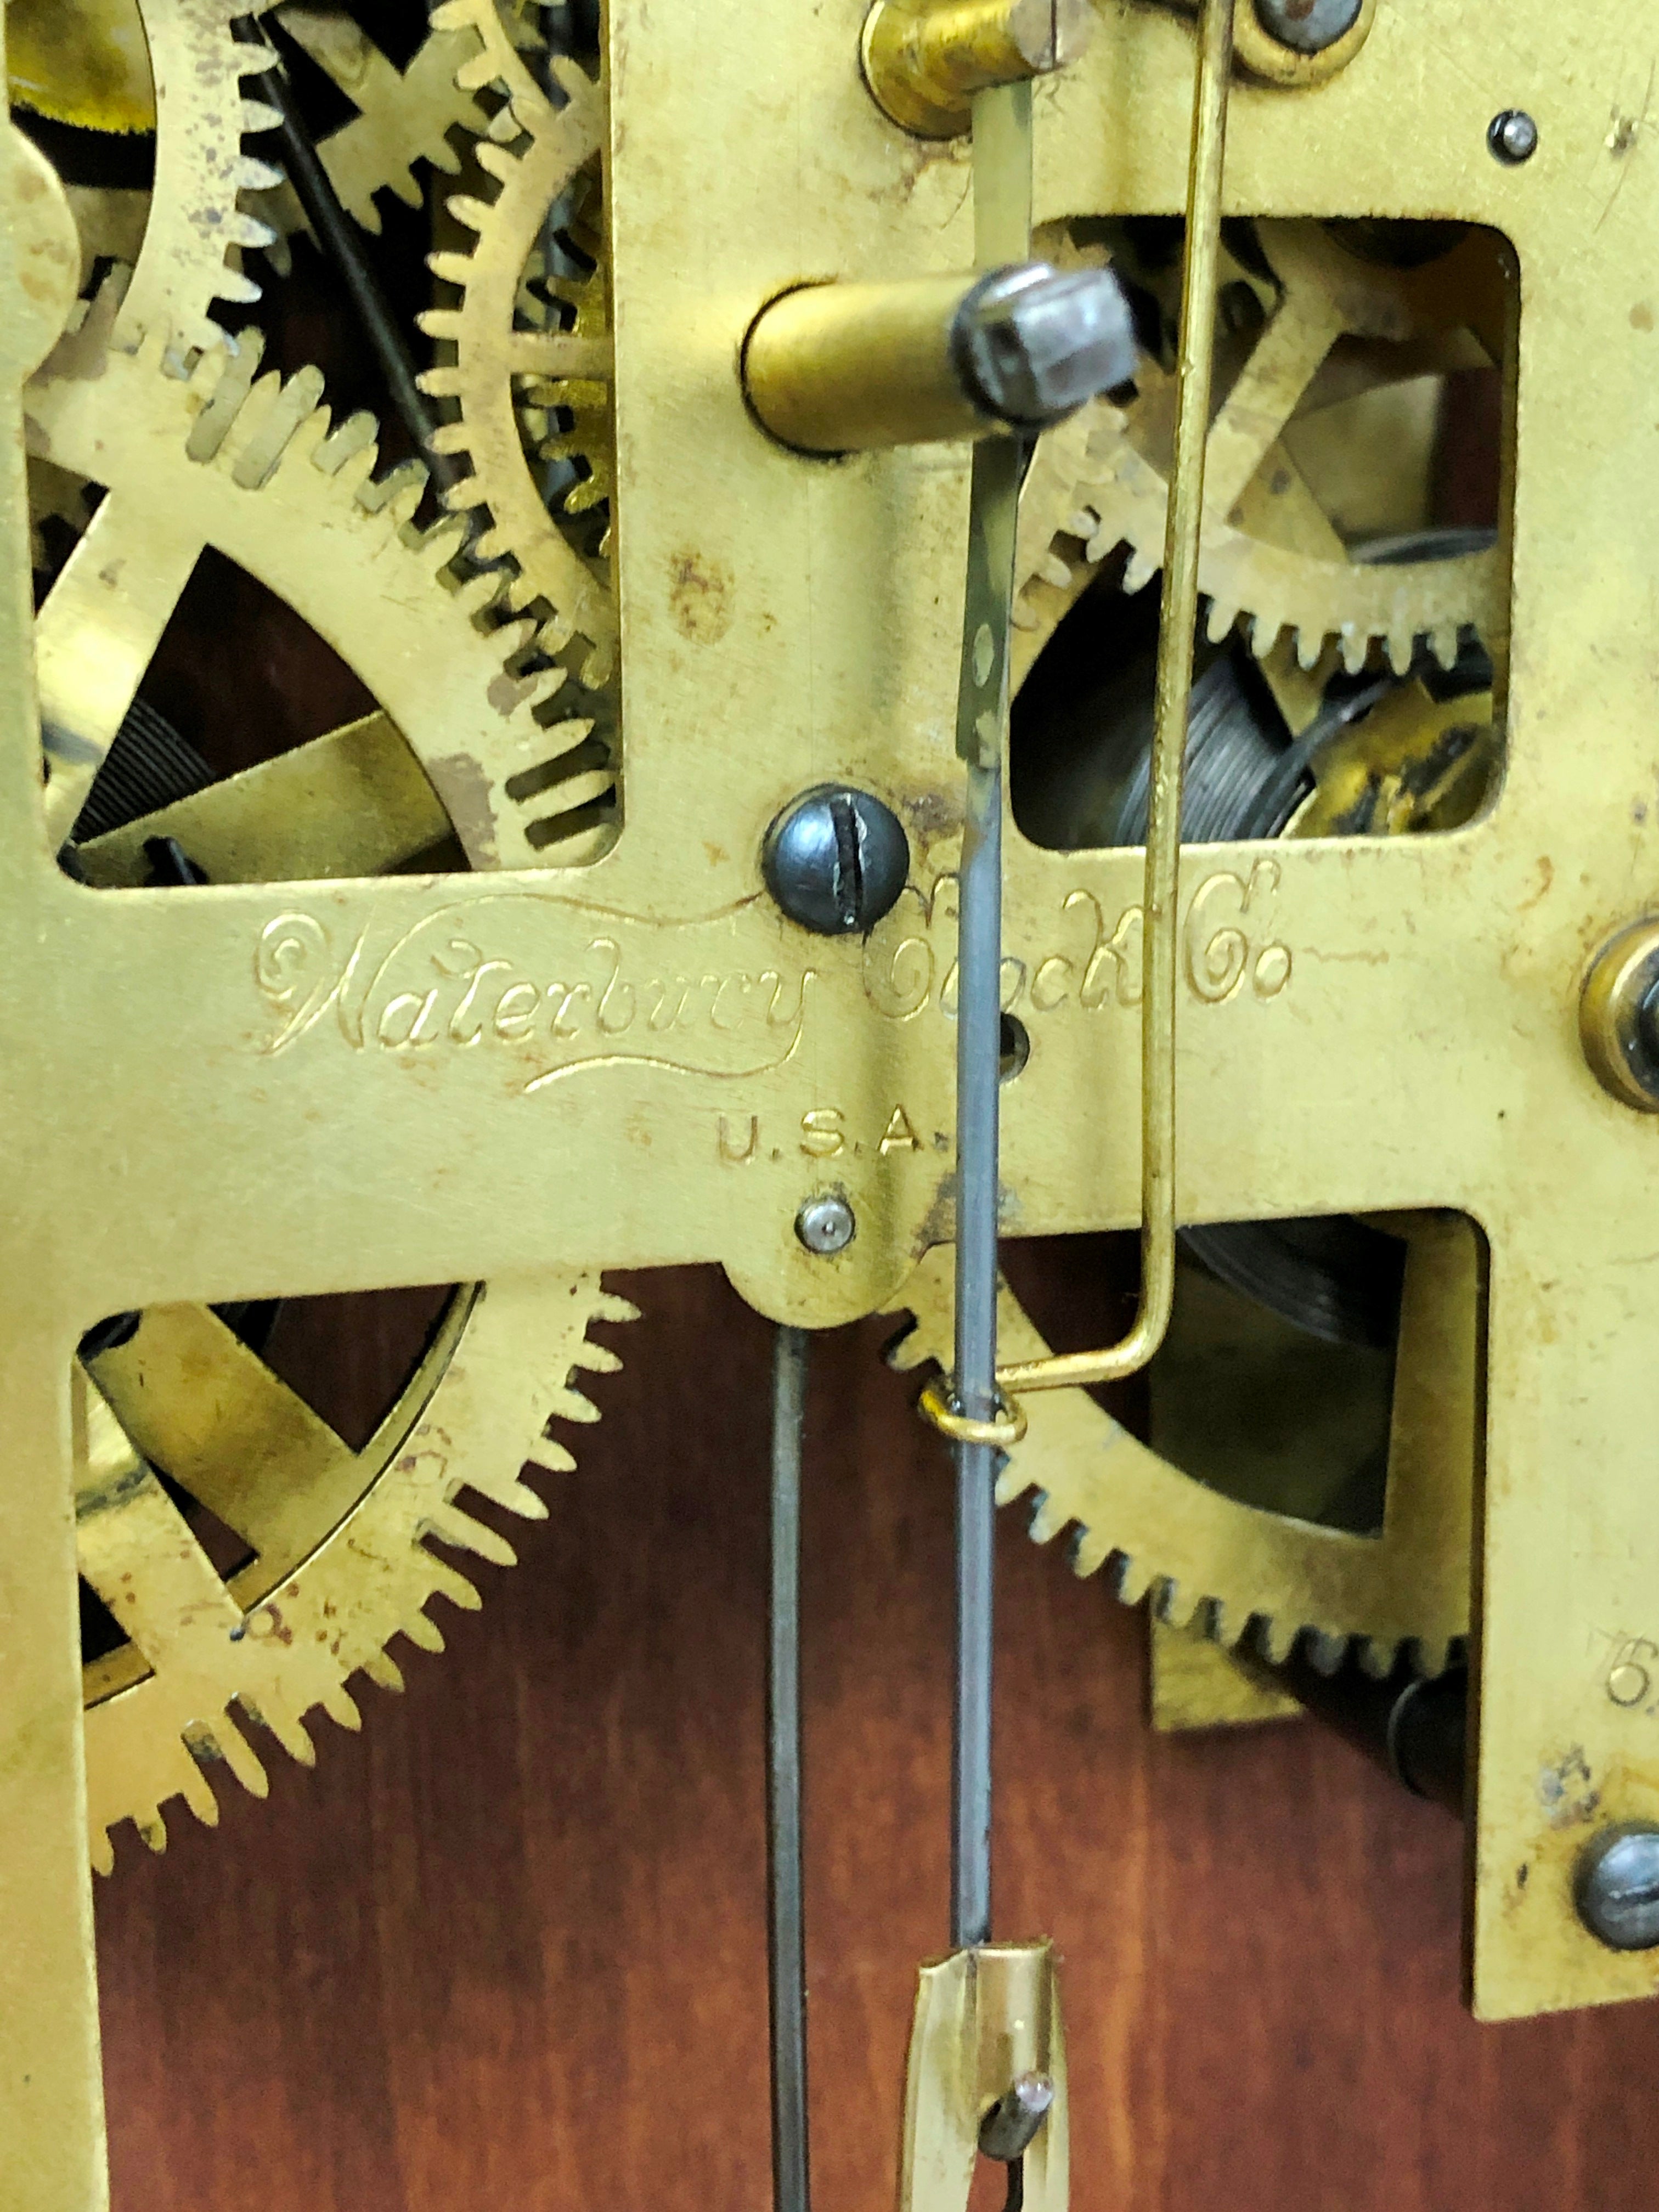 Antique WATERBURY U.S.A Cottage Mantel Clock | eXibit collection